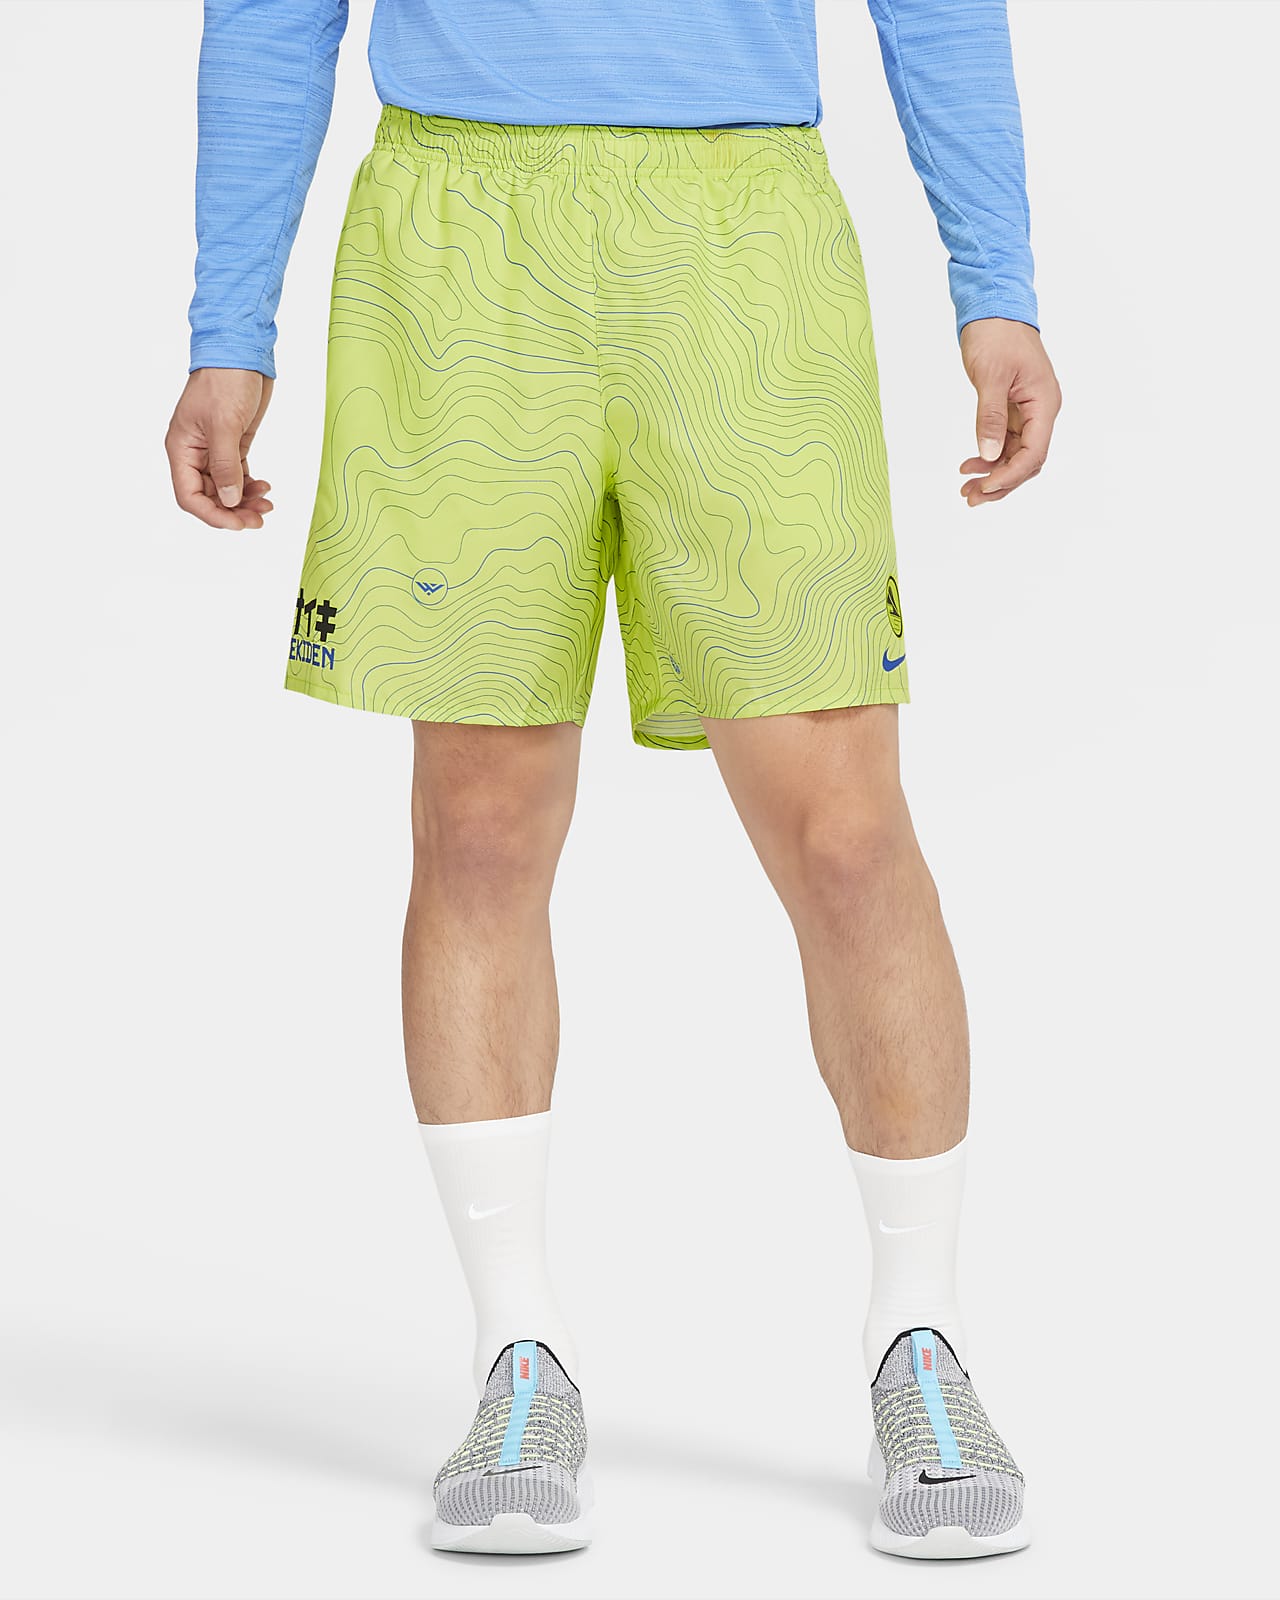 nike men's lined running shorts